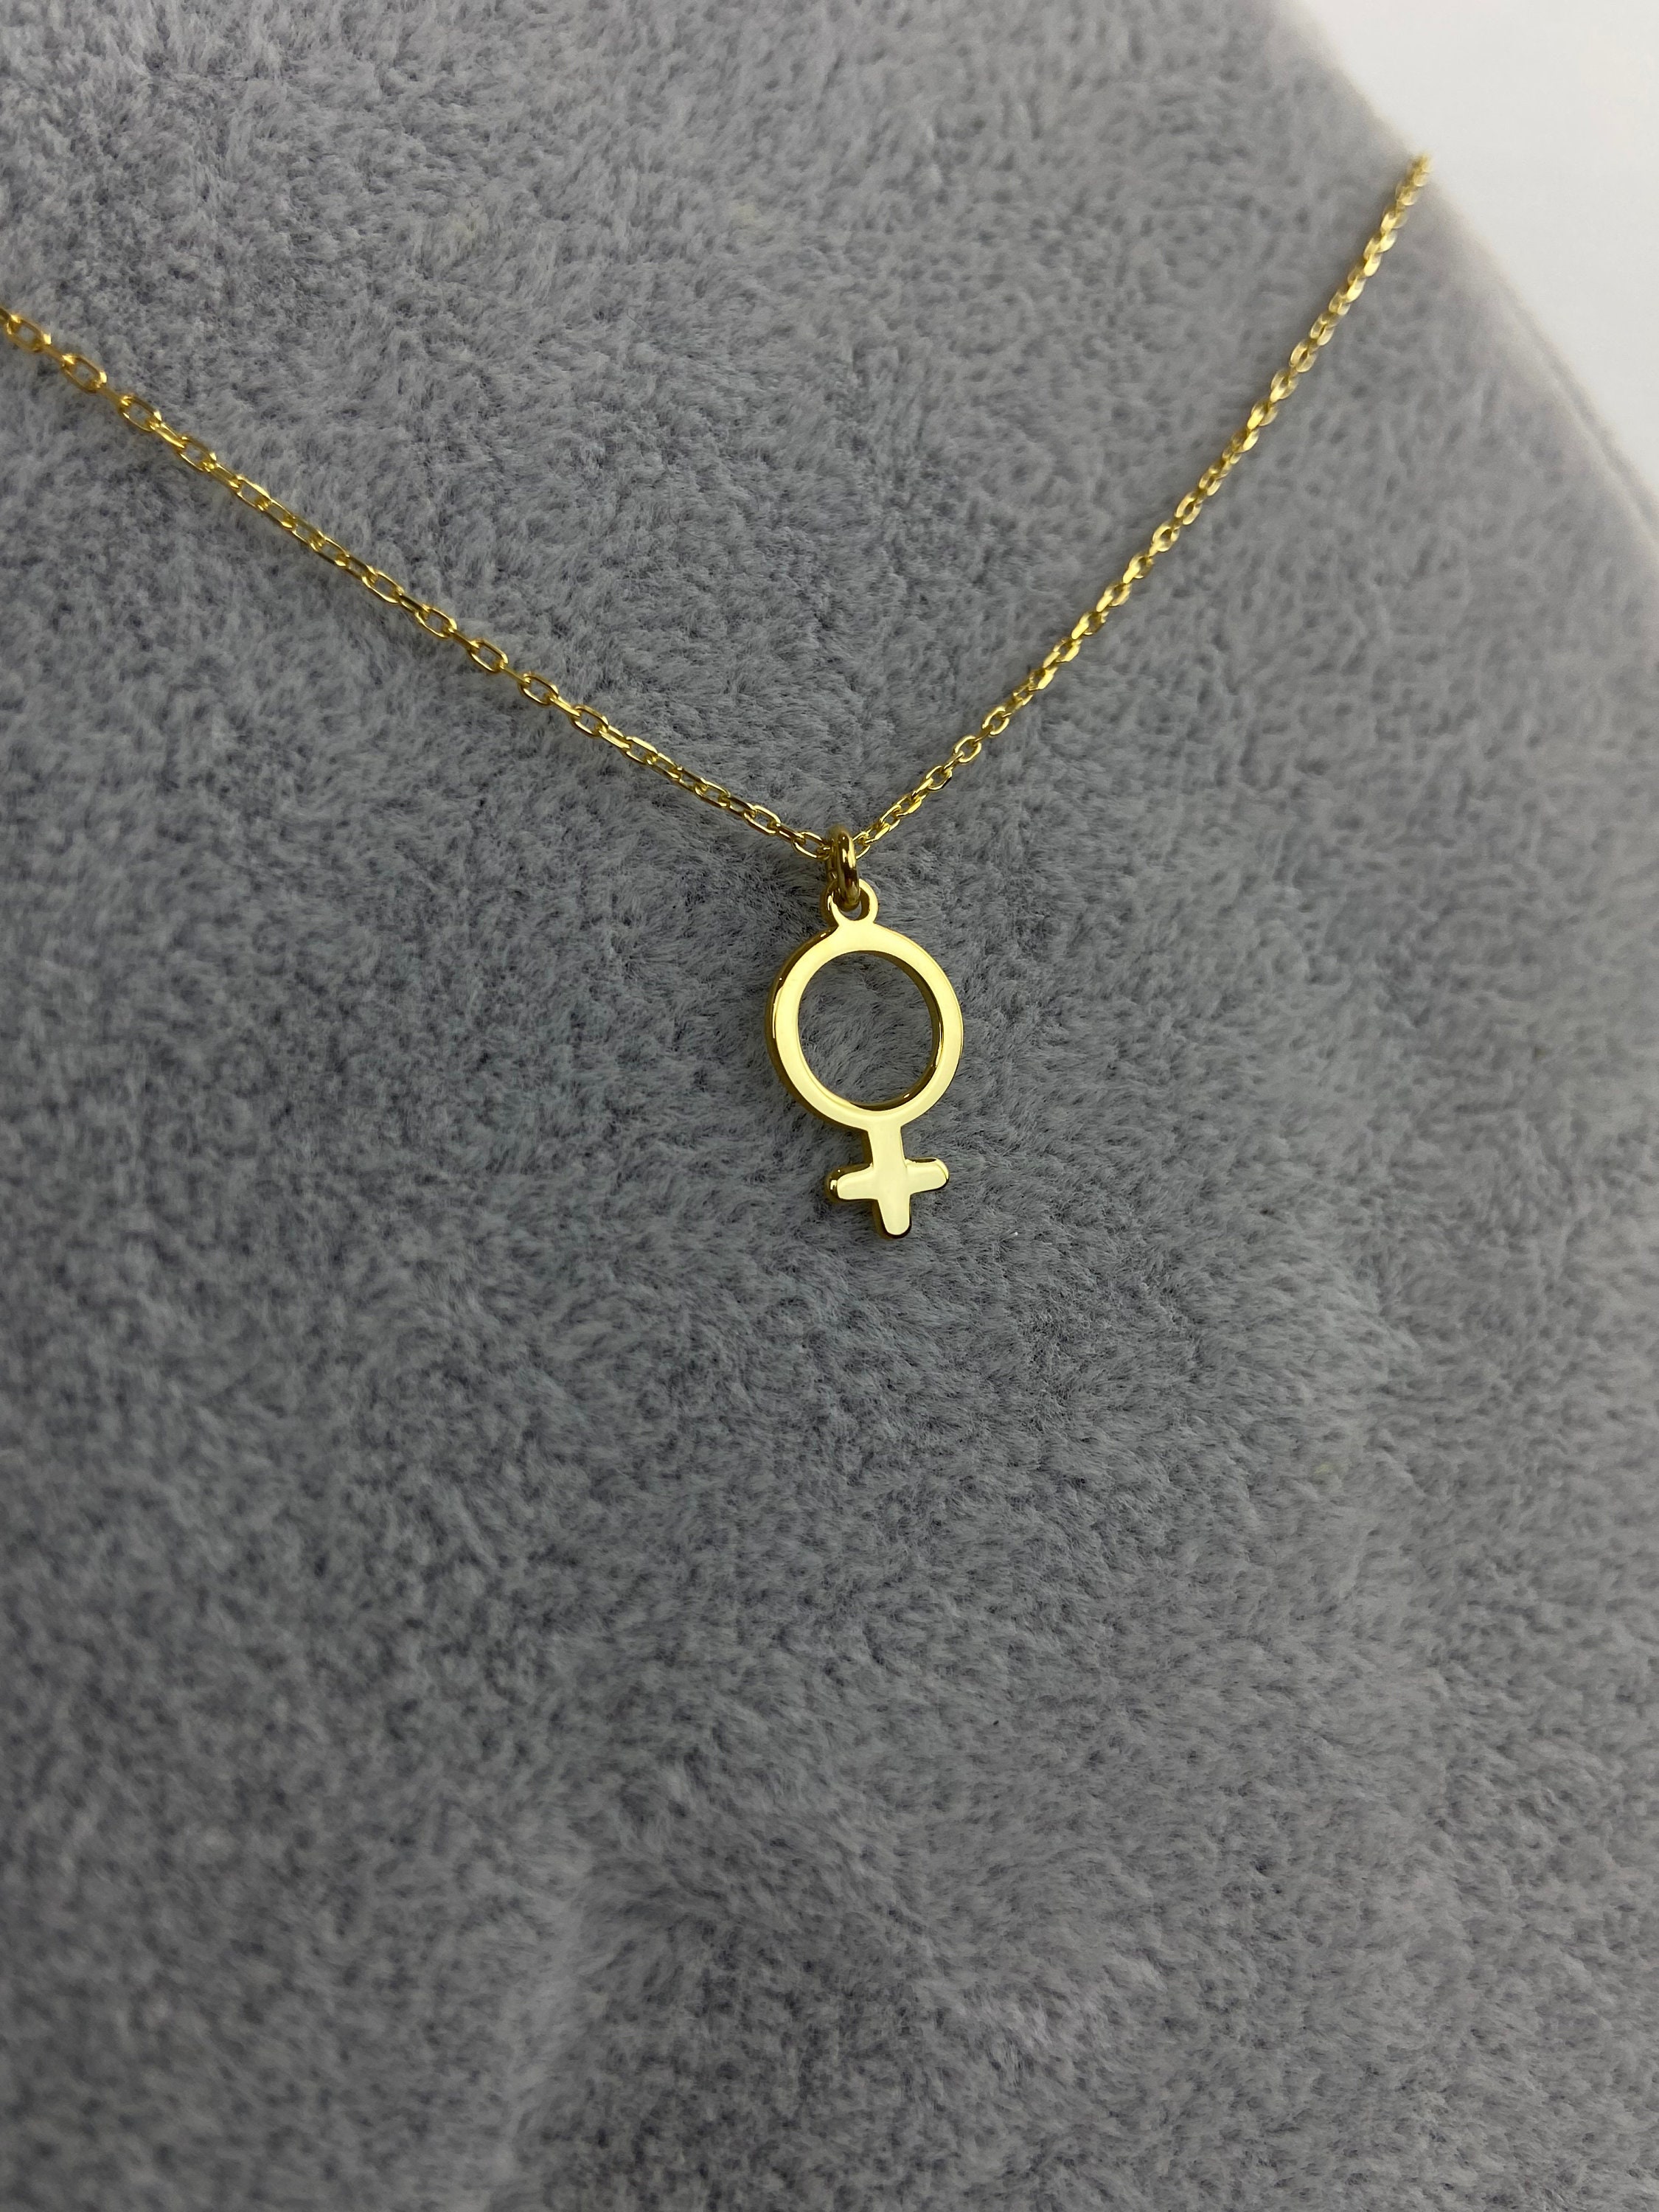 Tiny Female Symbol Necklace Gold Venus Symbol Necklace - Etsy